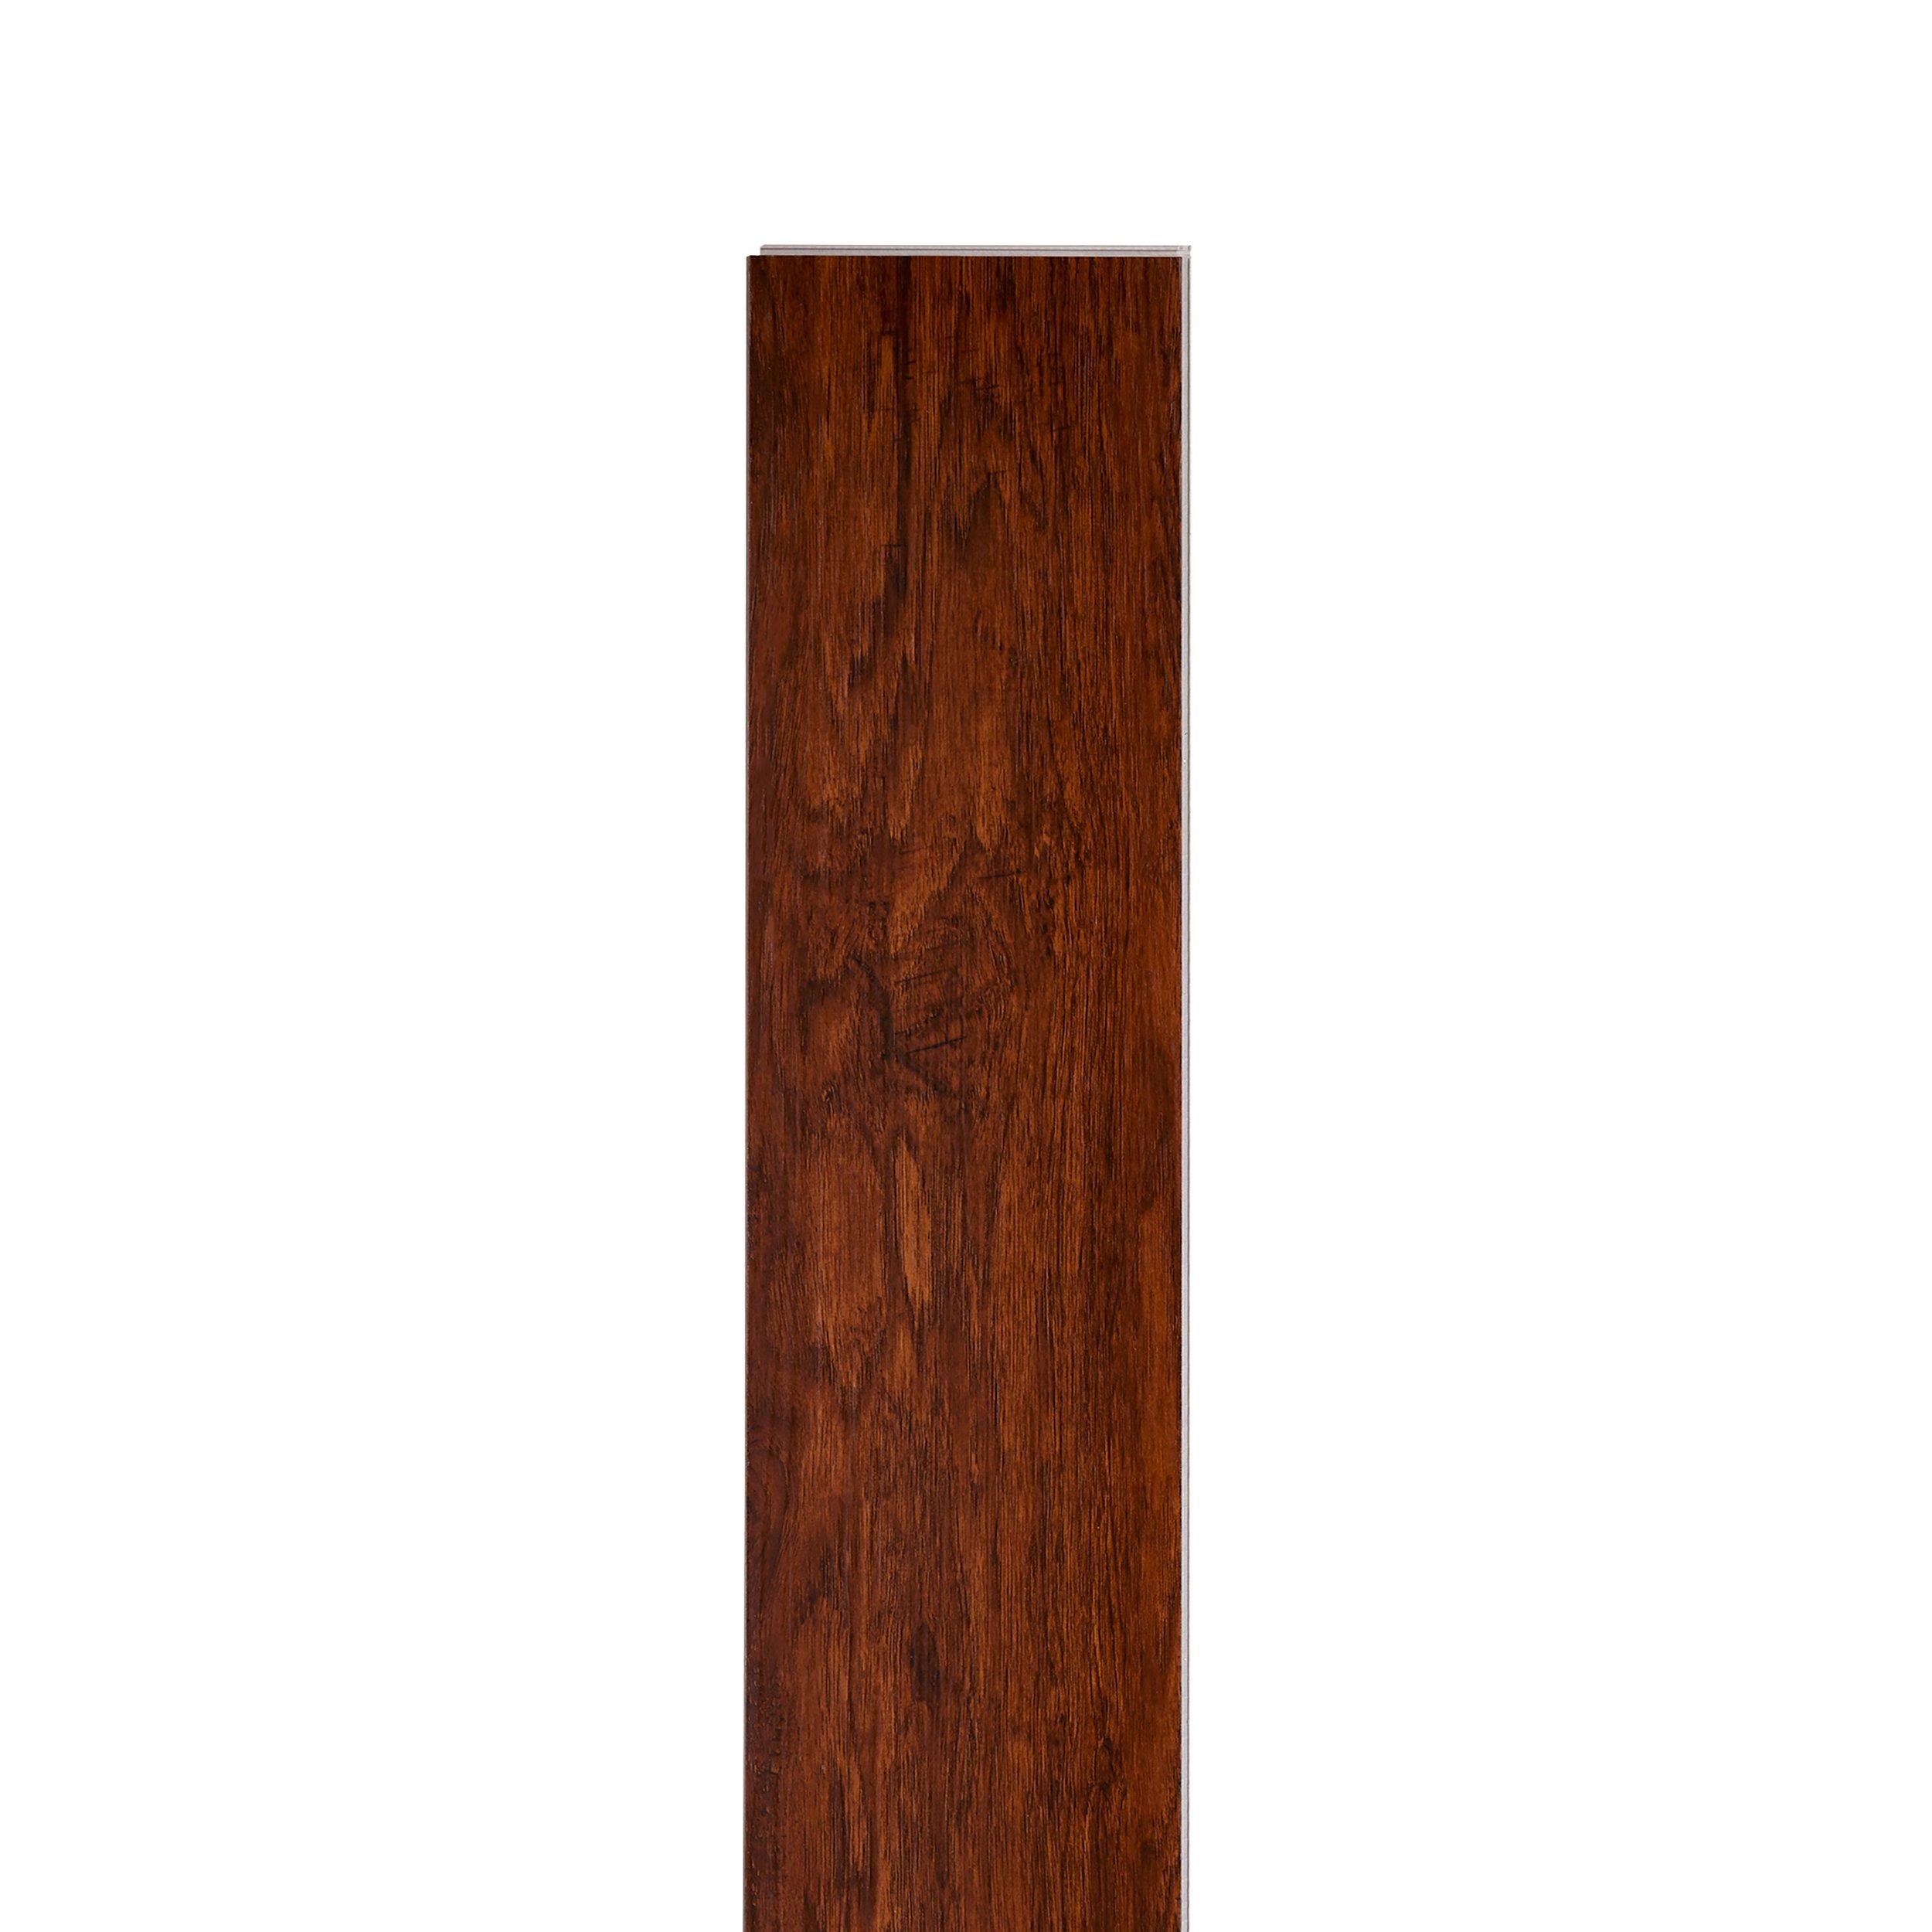 Timber View Hickory Rigid Core Luxury Vinyl Plank